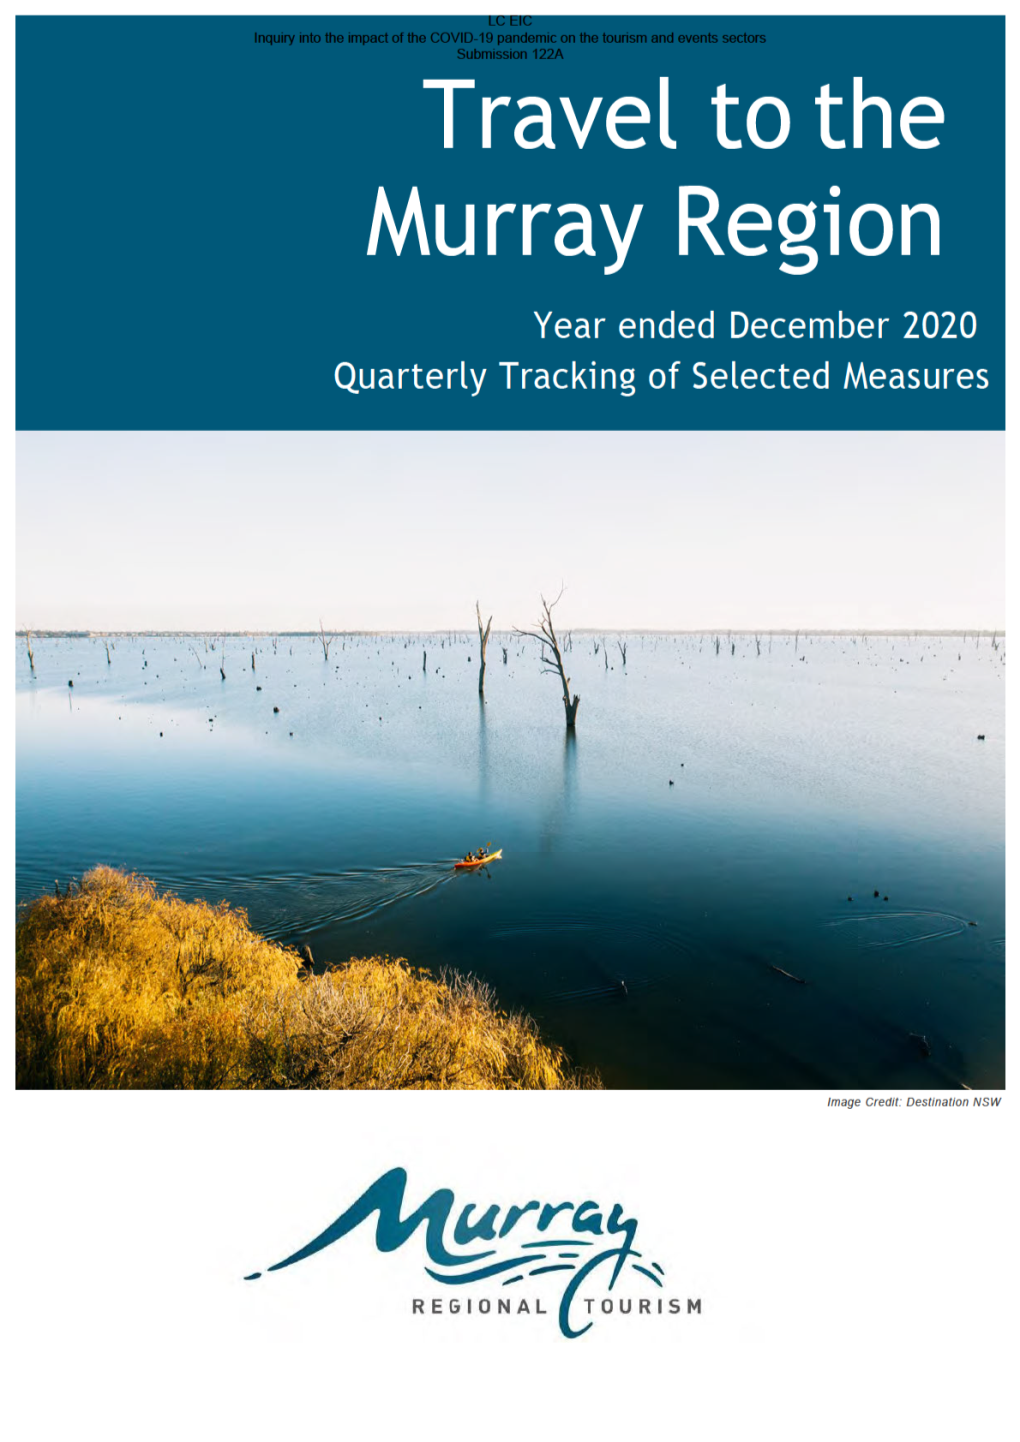 Murray Regional Tourism3.11 MB